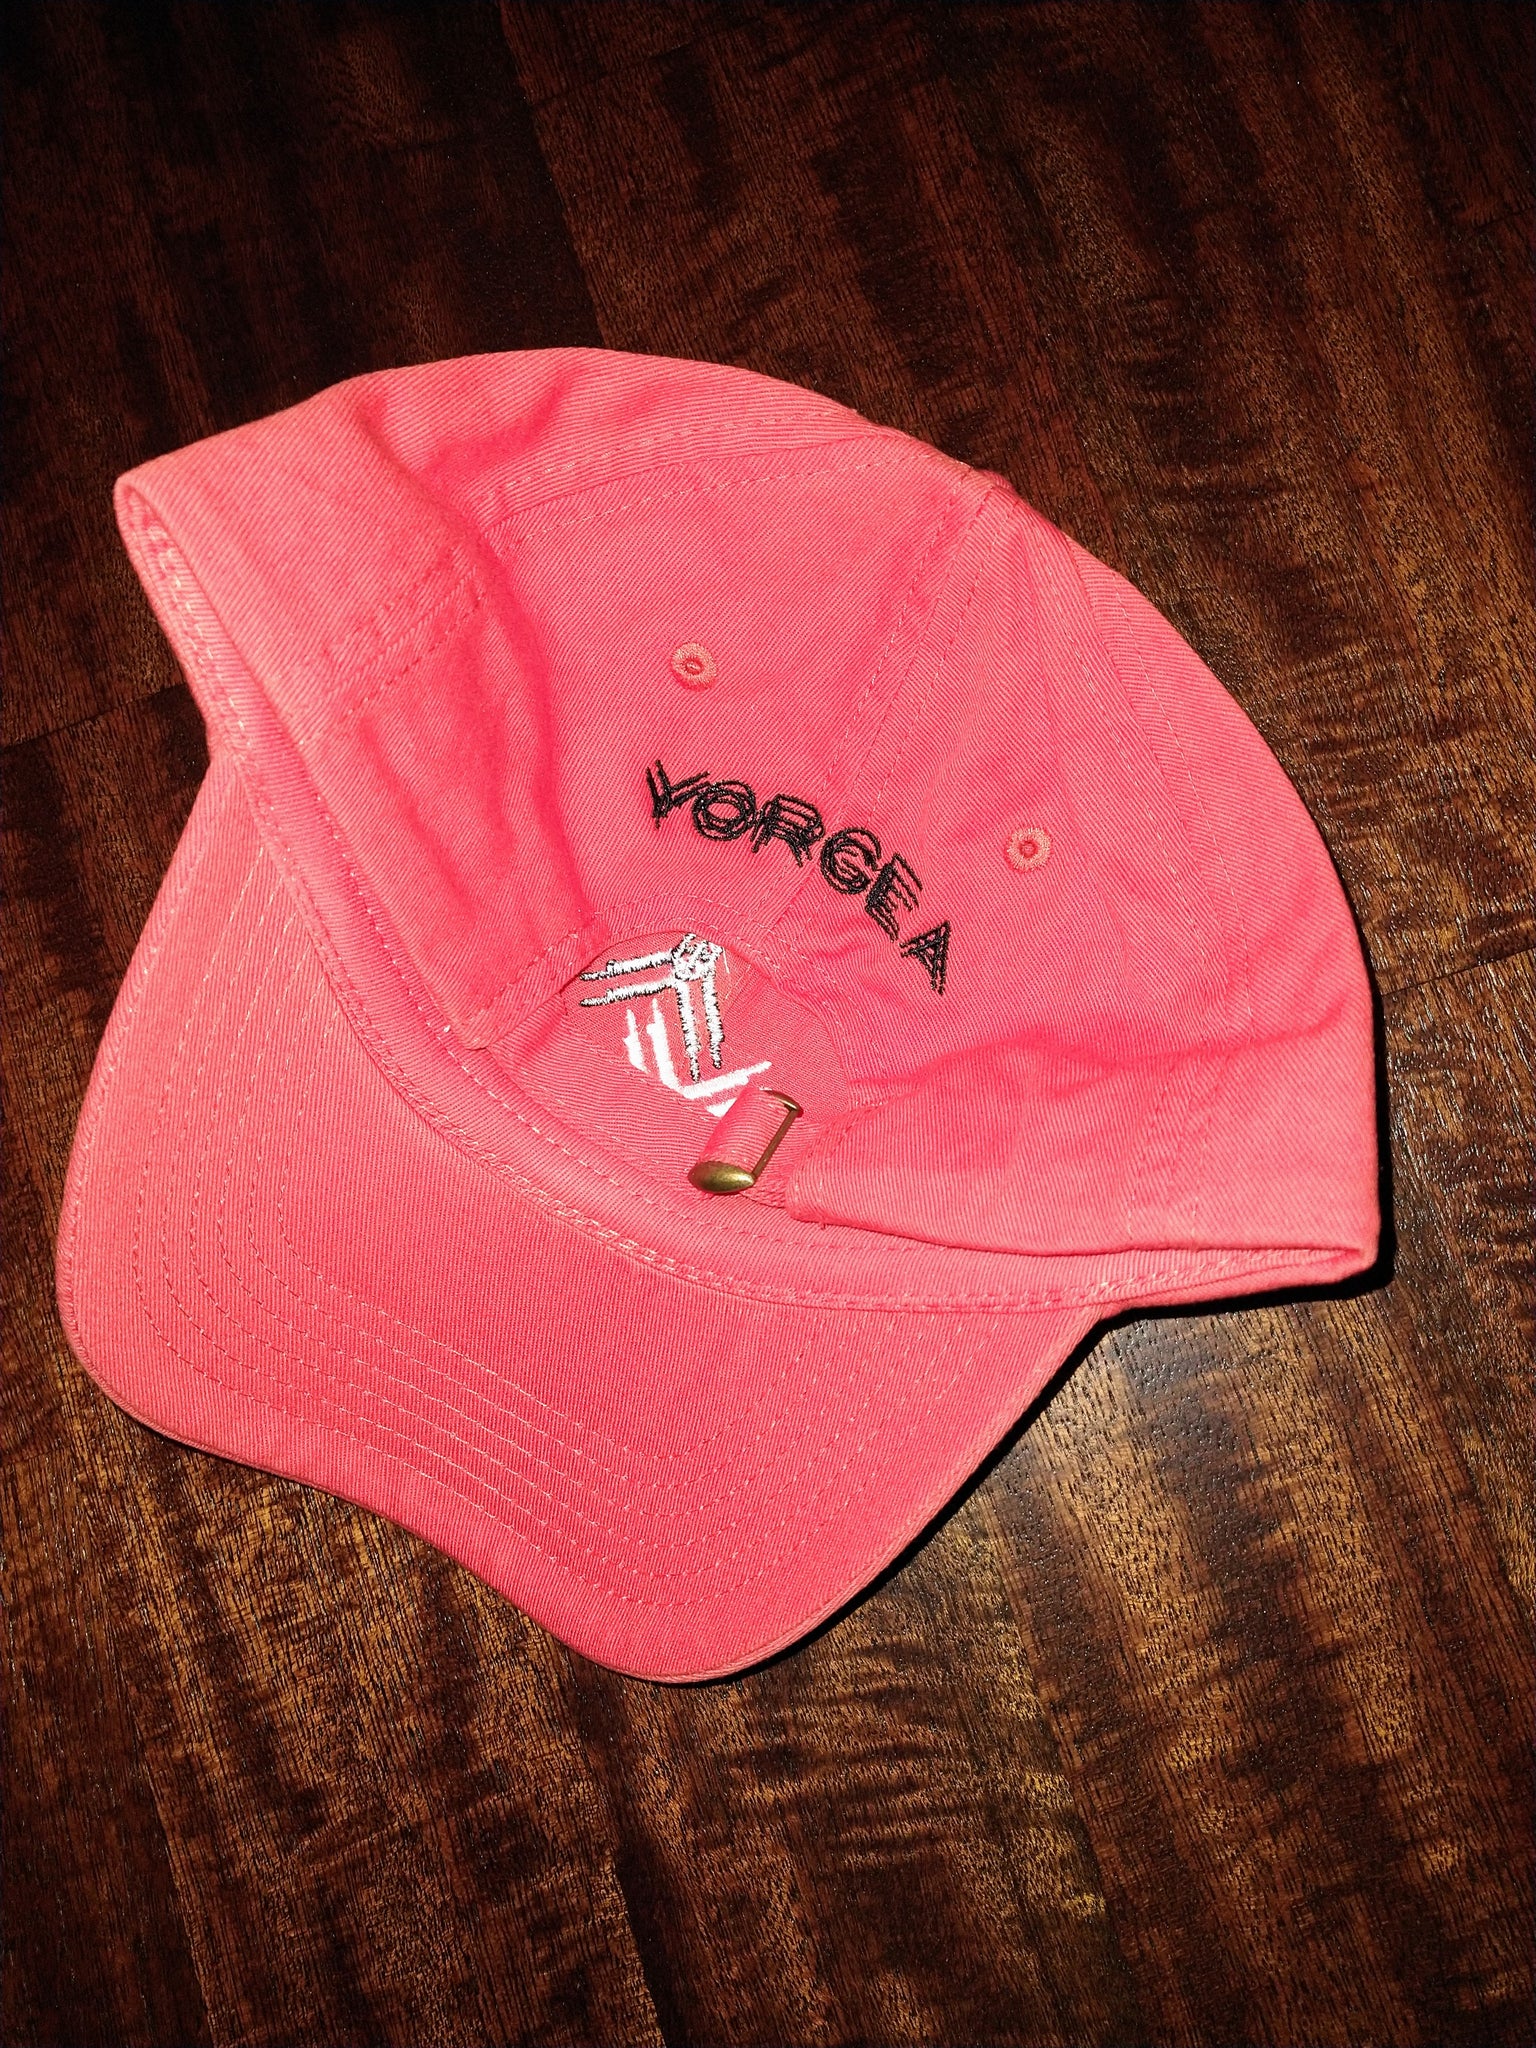 Yorgea By Demond Siobon Org/Blk/Wht Embroidered Dad hat